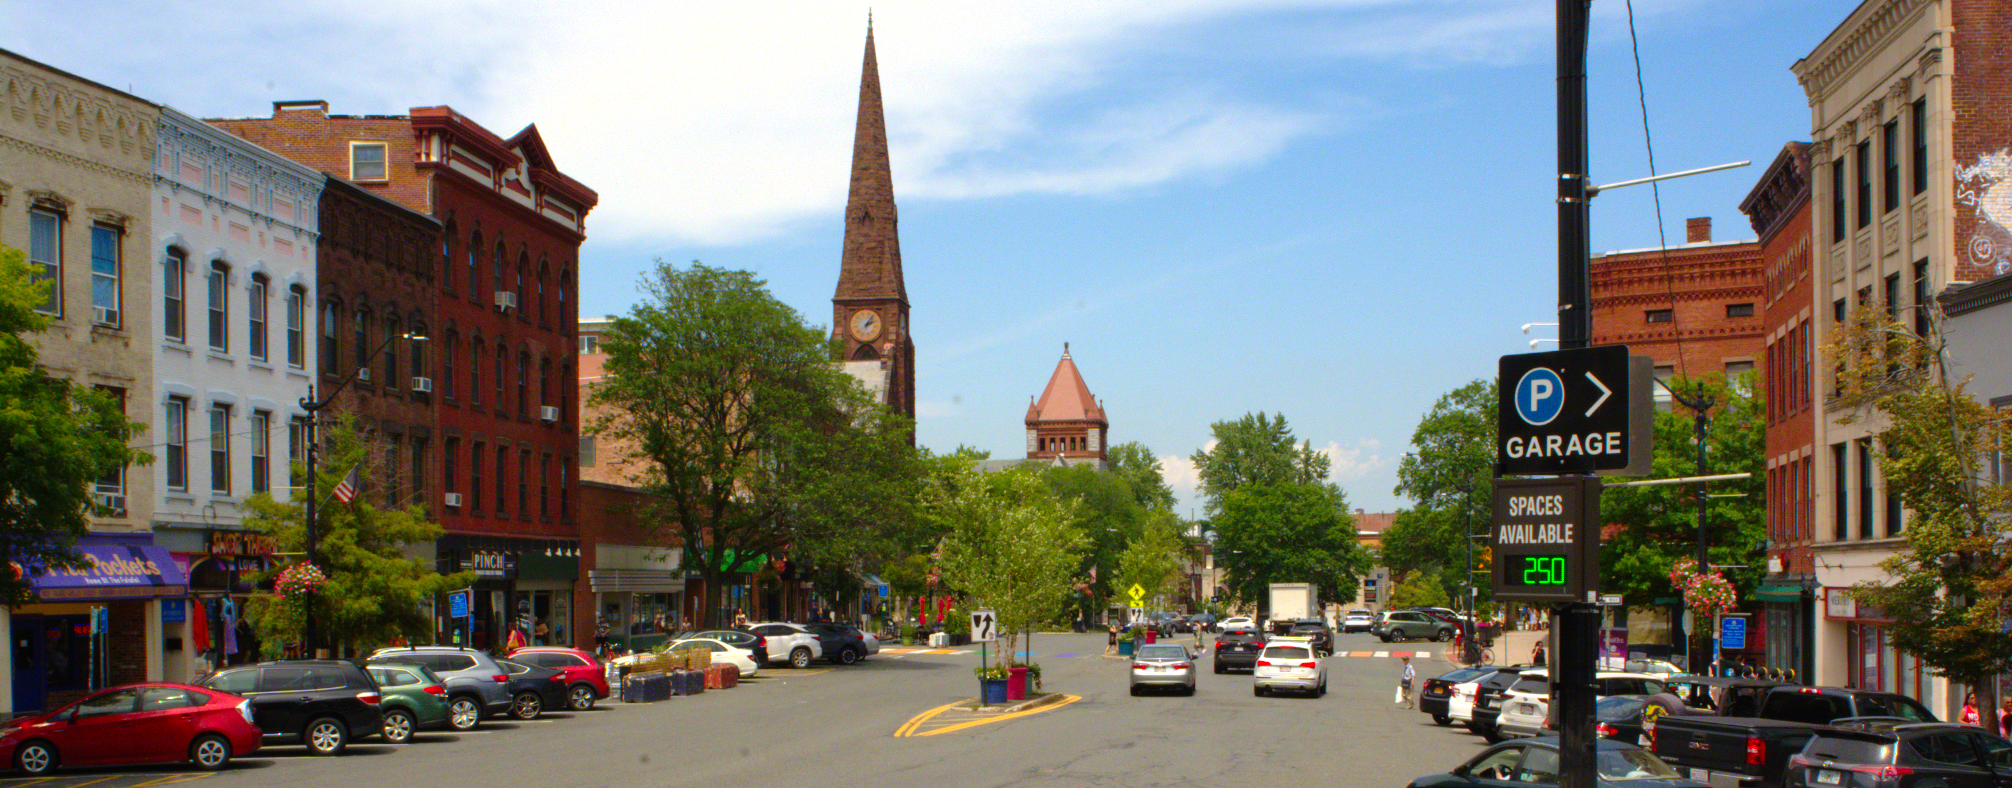 Main Street, Northampton, MA